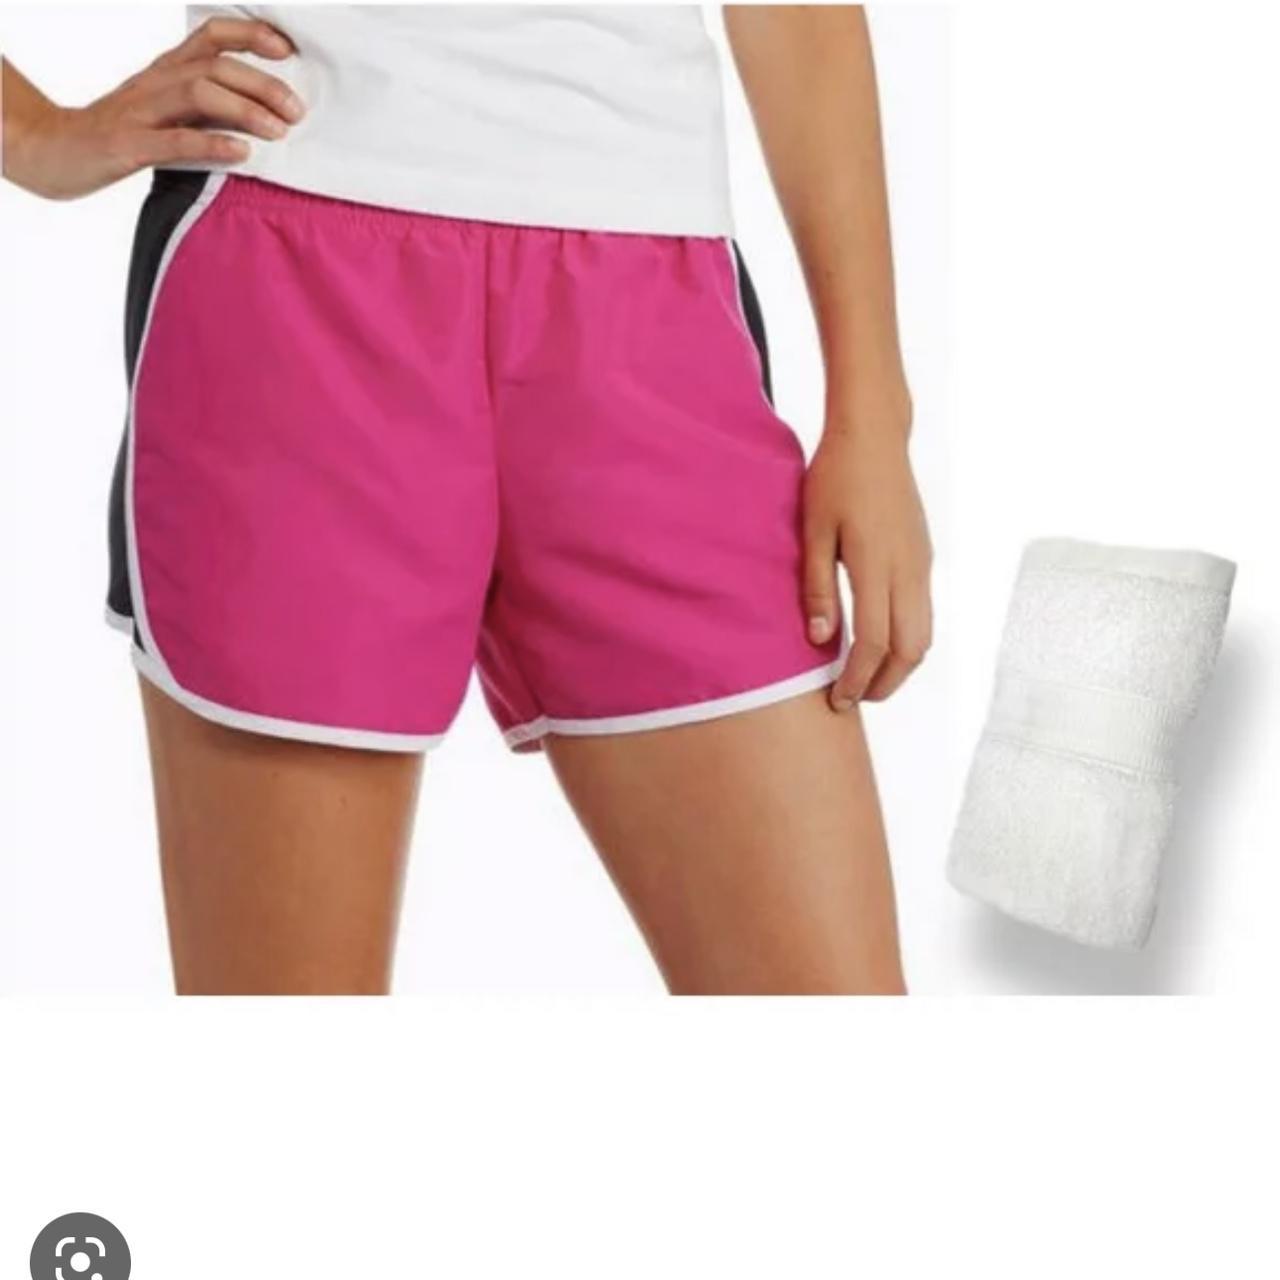 Danskin Now, Shorts, Danskin Now Pink Shorts